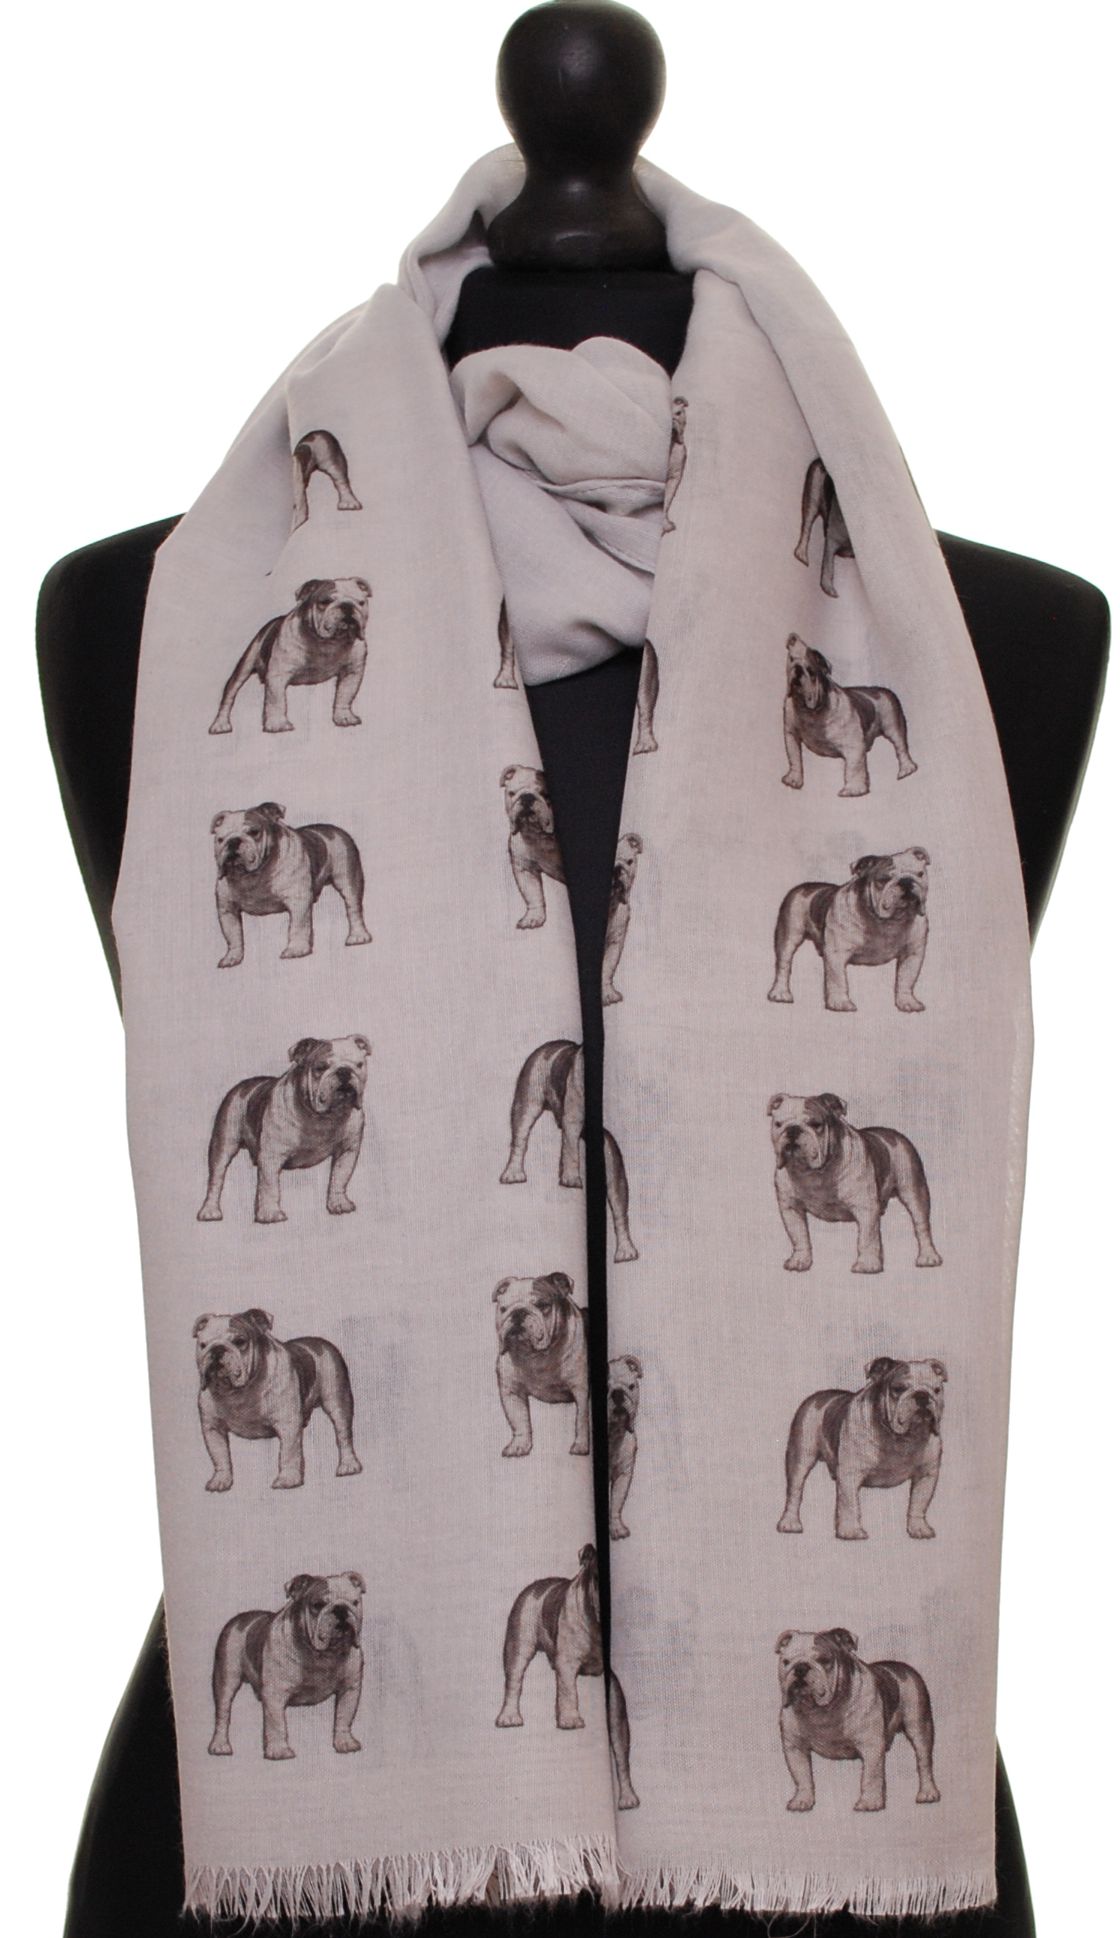 Bulldog hand printed ladies fashion scarf